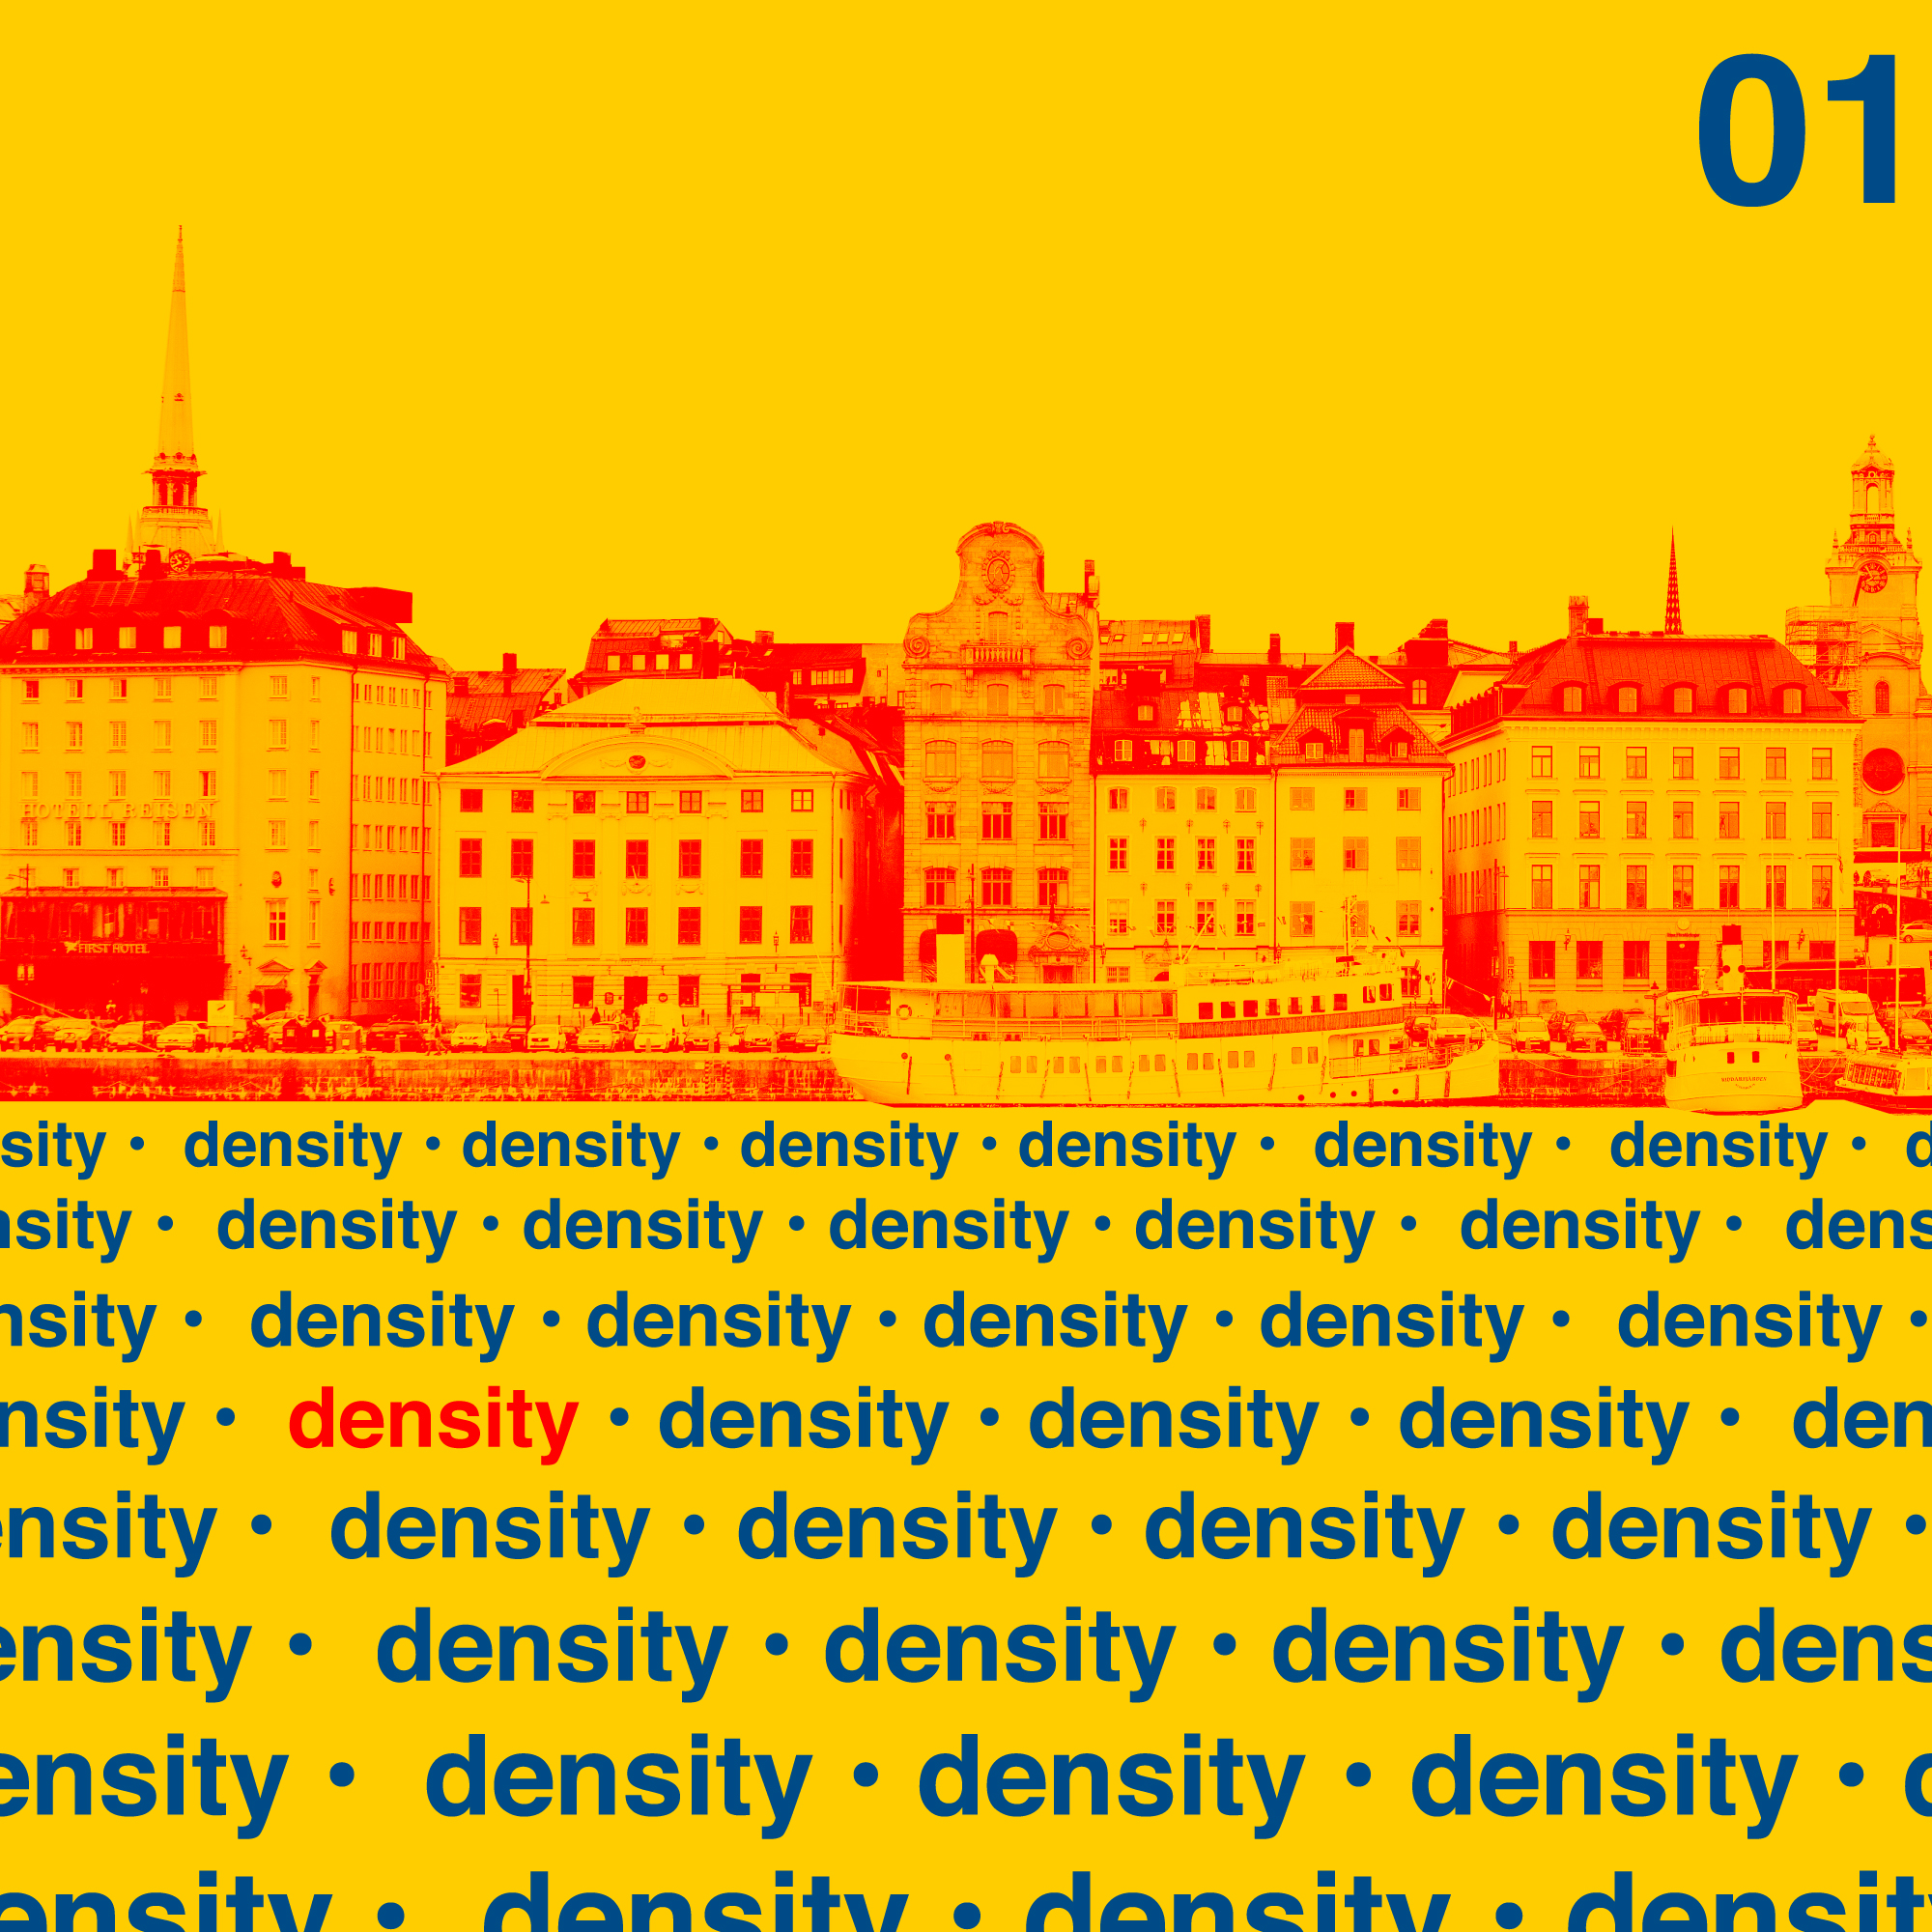 illustration for podcast episode on architectural density